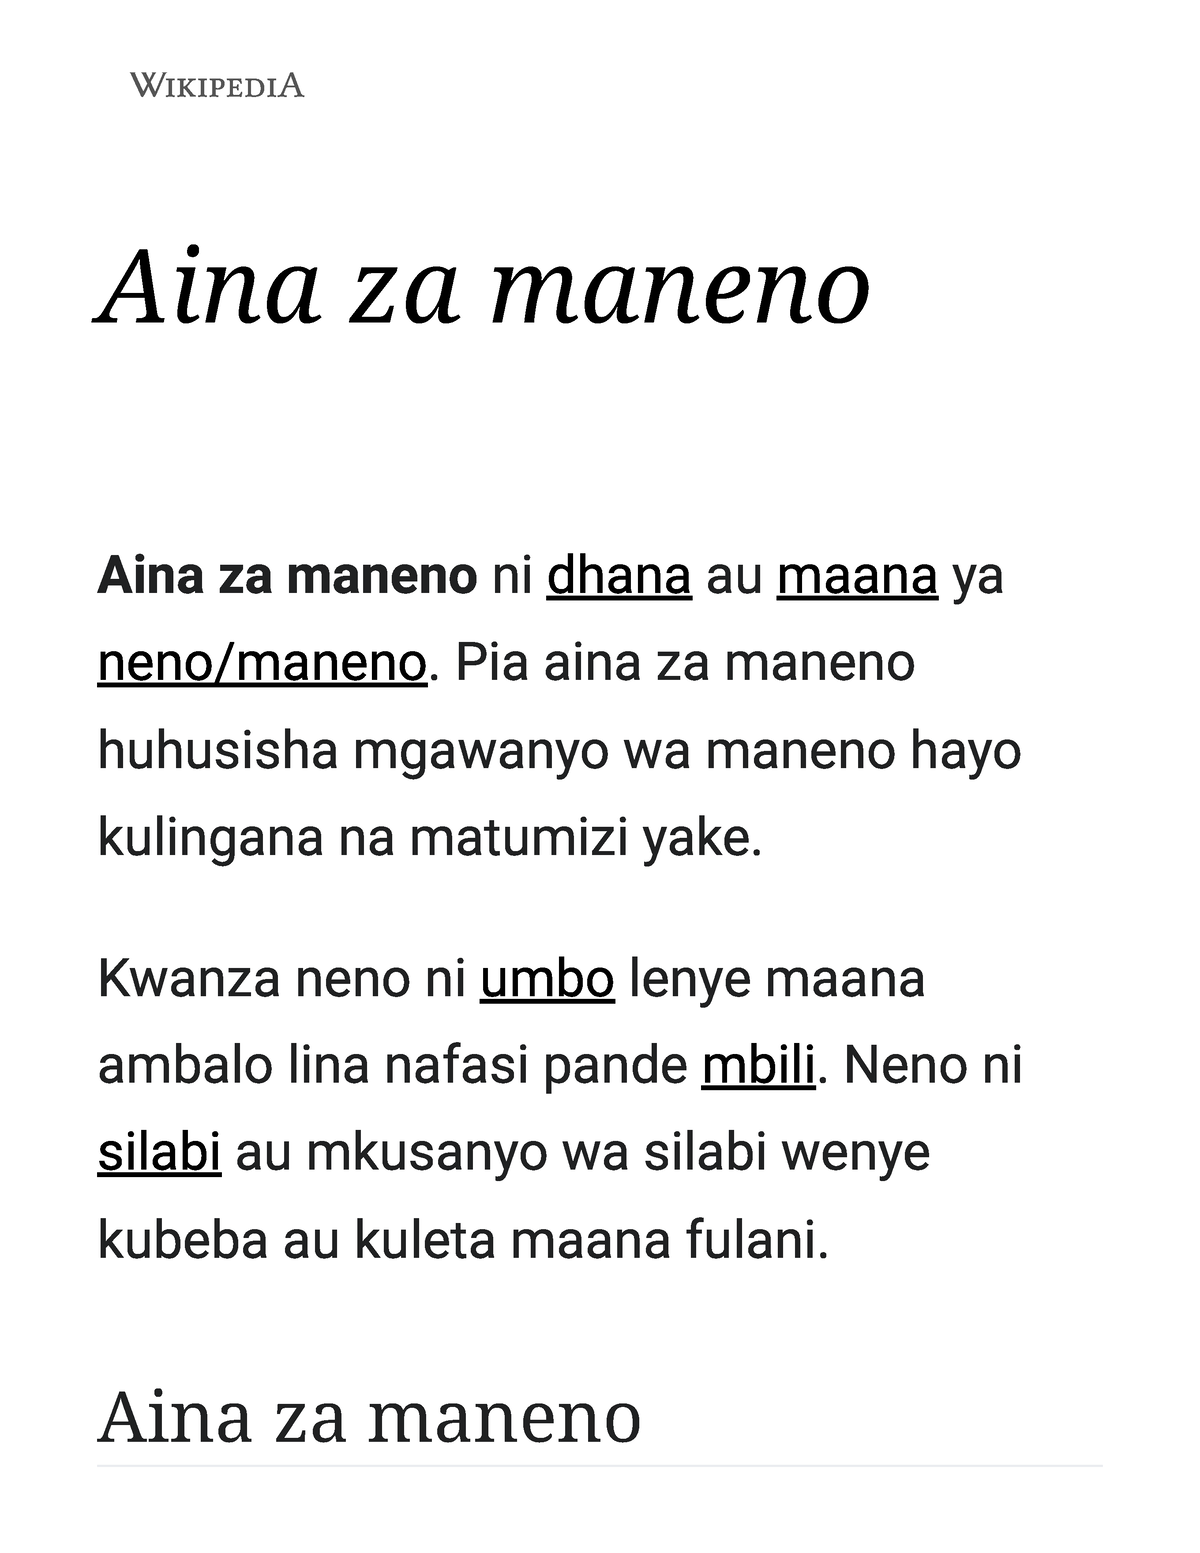 Aina za maneno - Wikipedia, kamusi elezo huru - Morphology and syntax ...